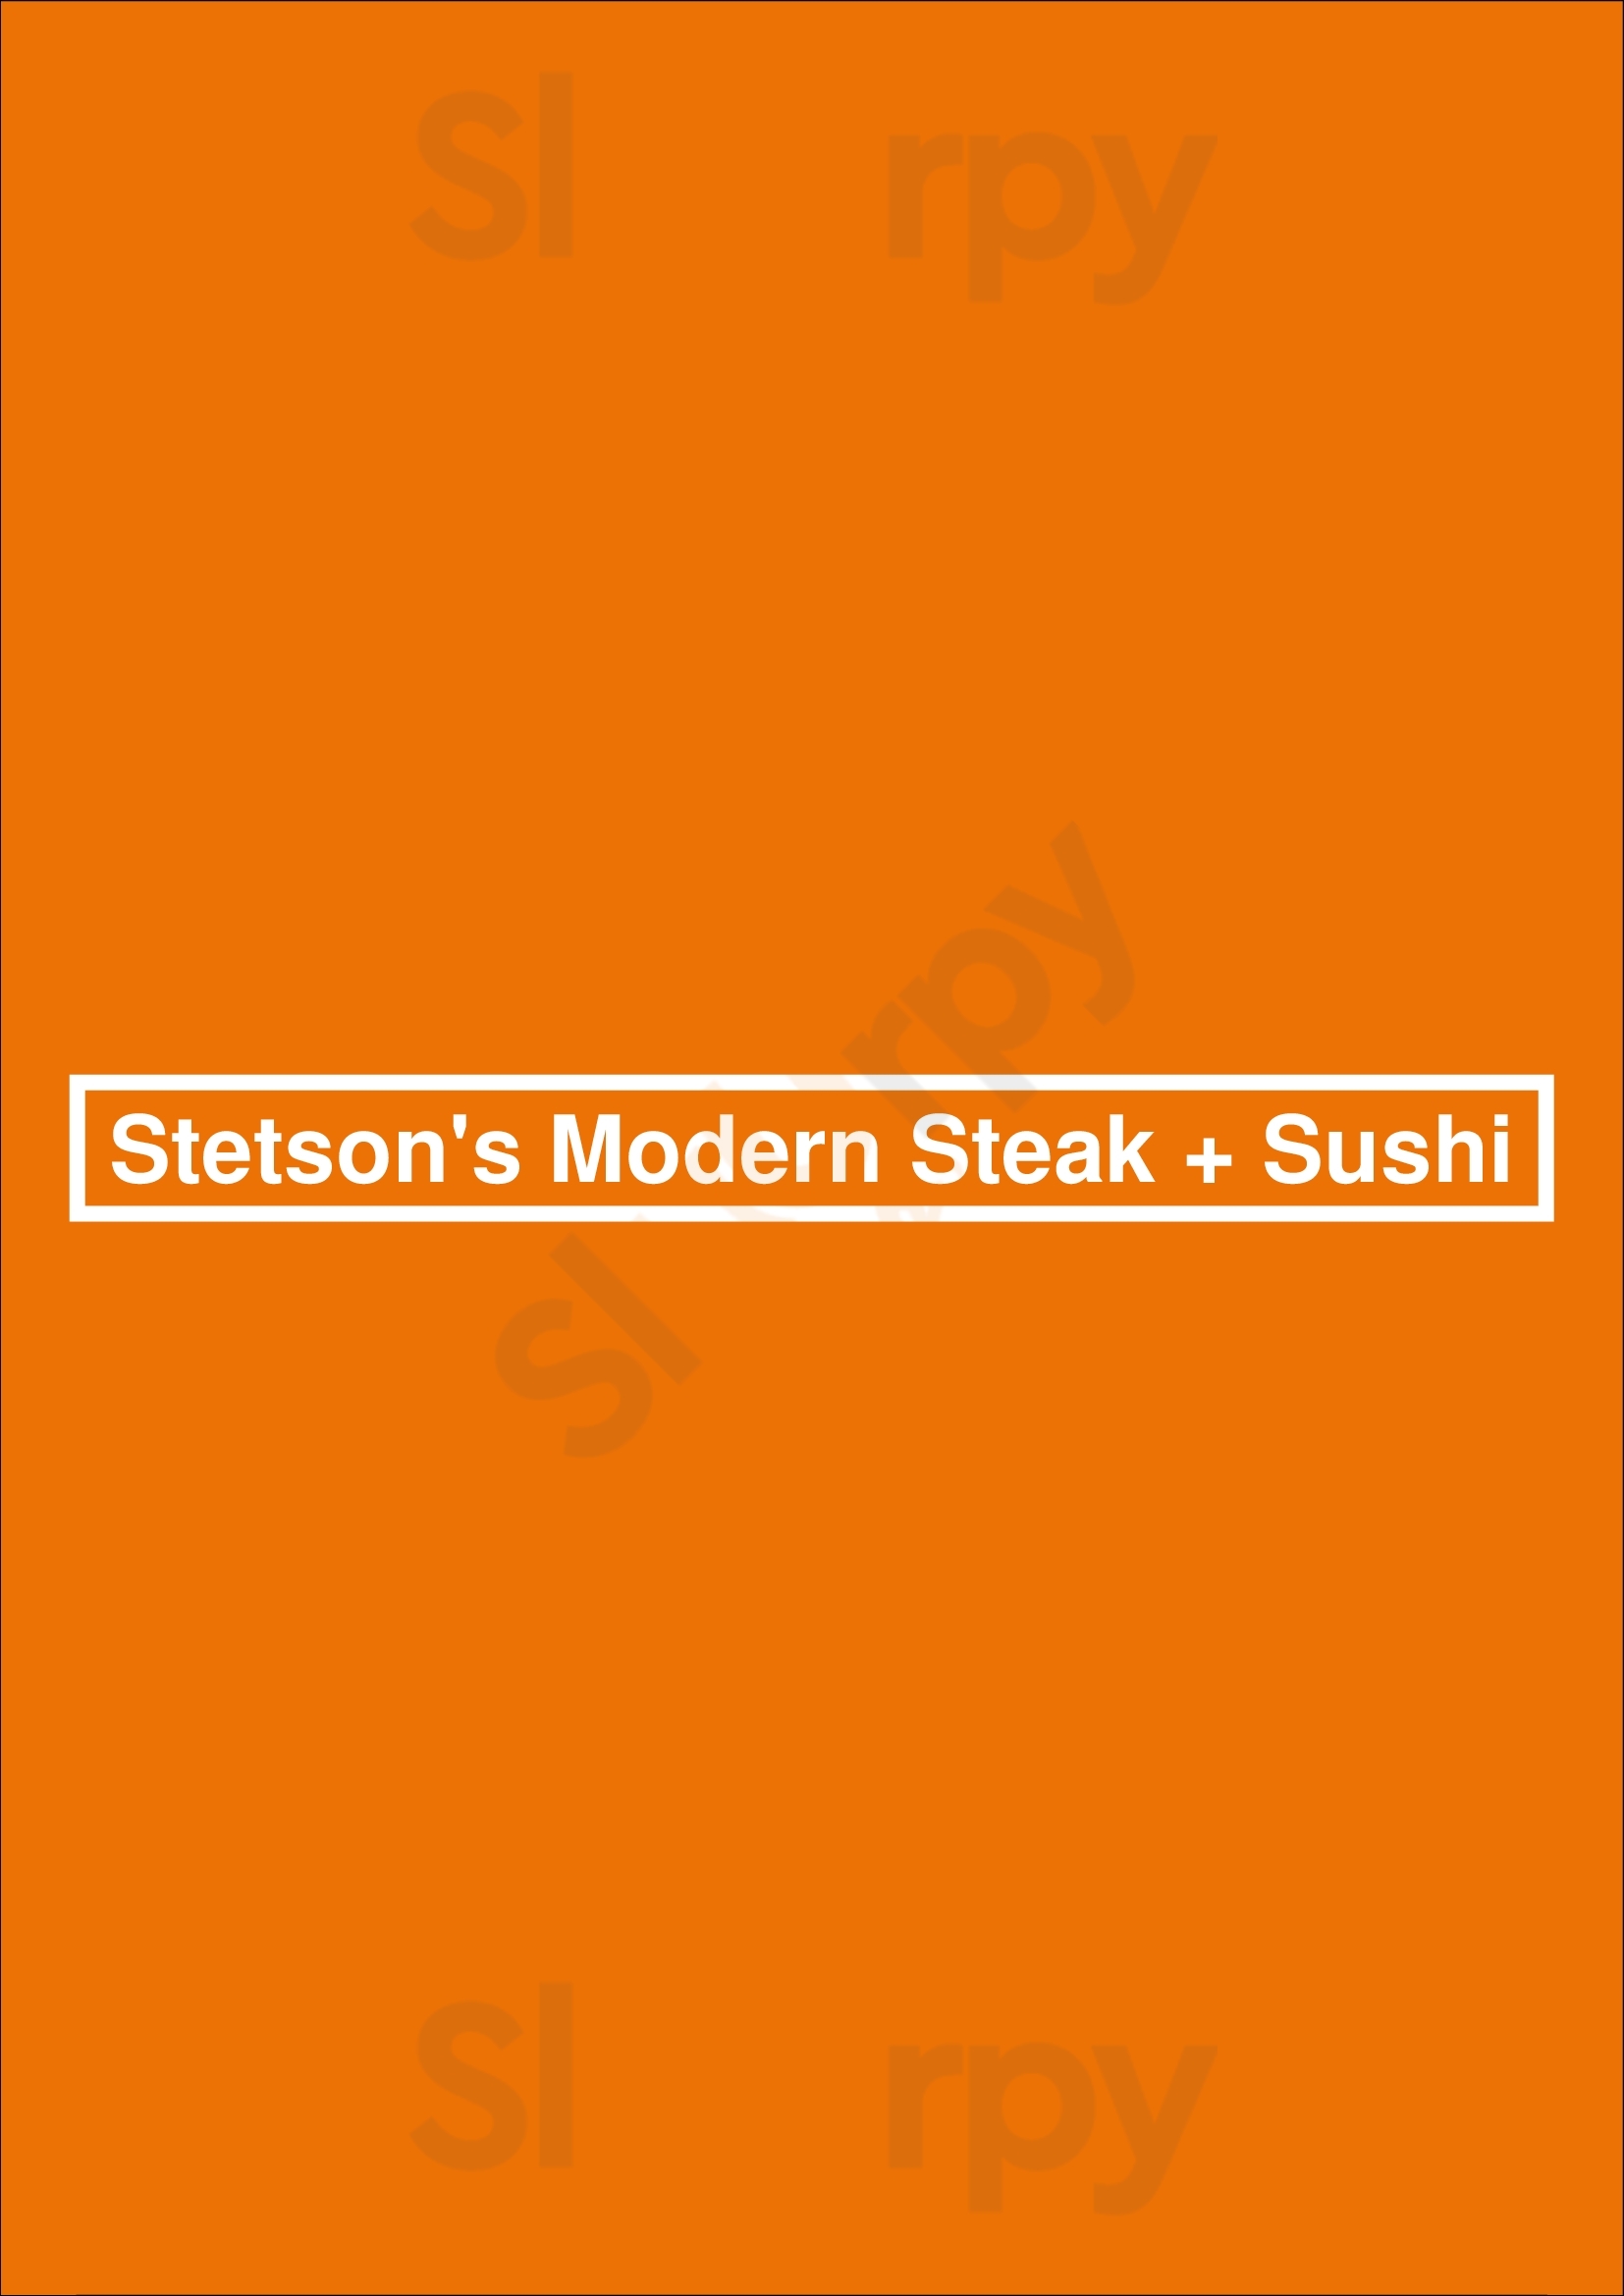 Stetson's Modern Steak + Sushi Chicago Menu - 1